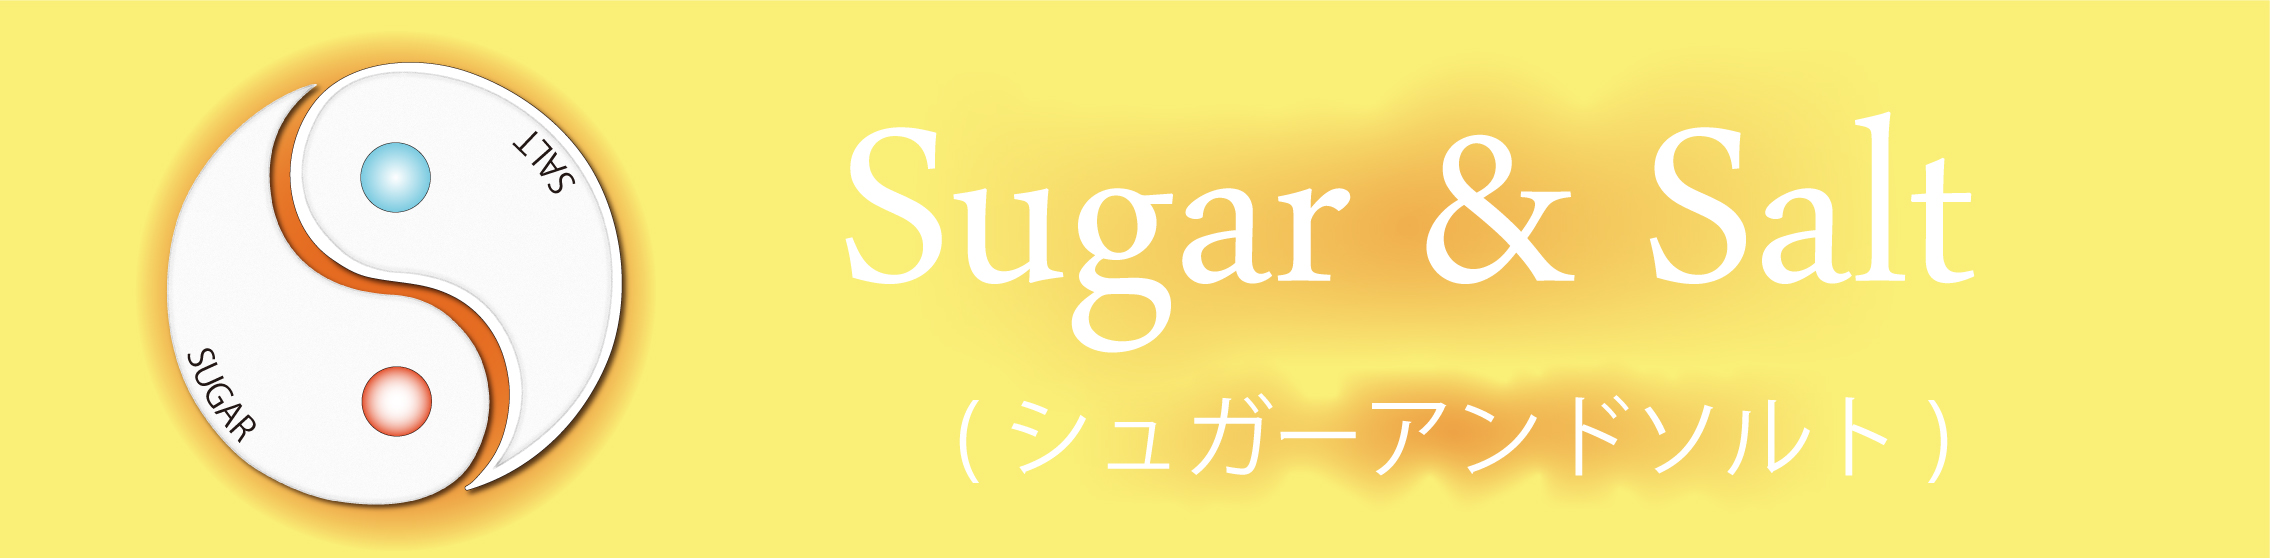 Sugar & Salt (シュガーアンドソルト)